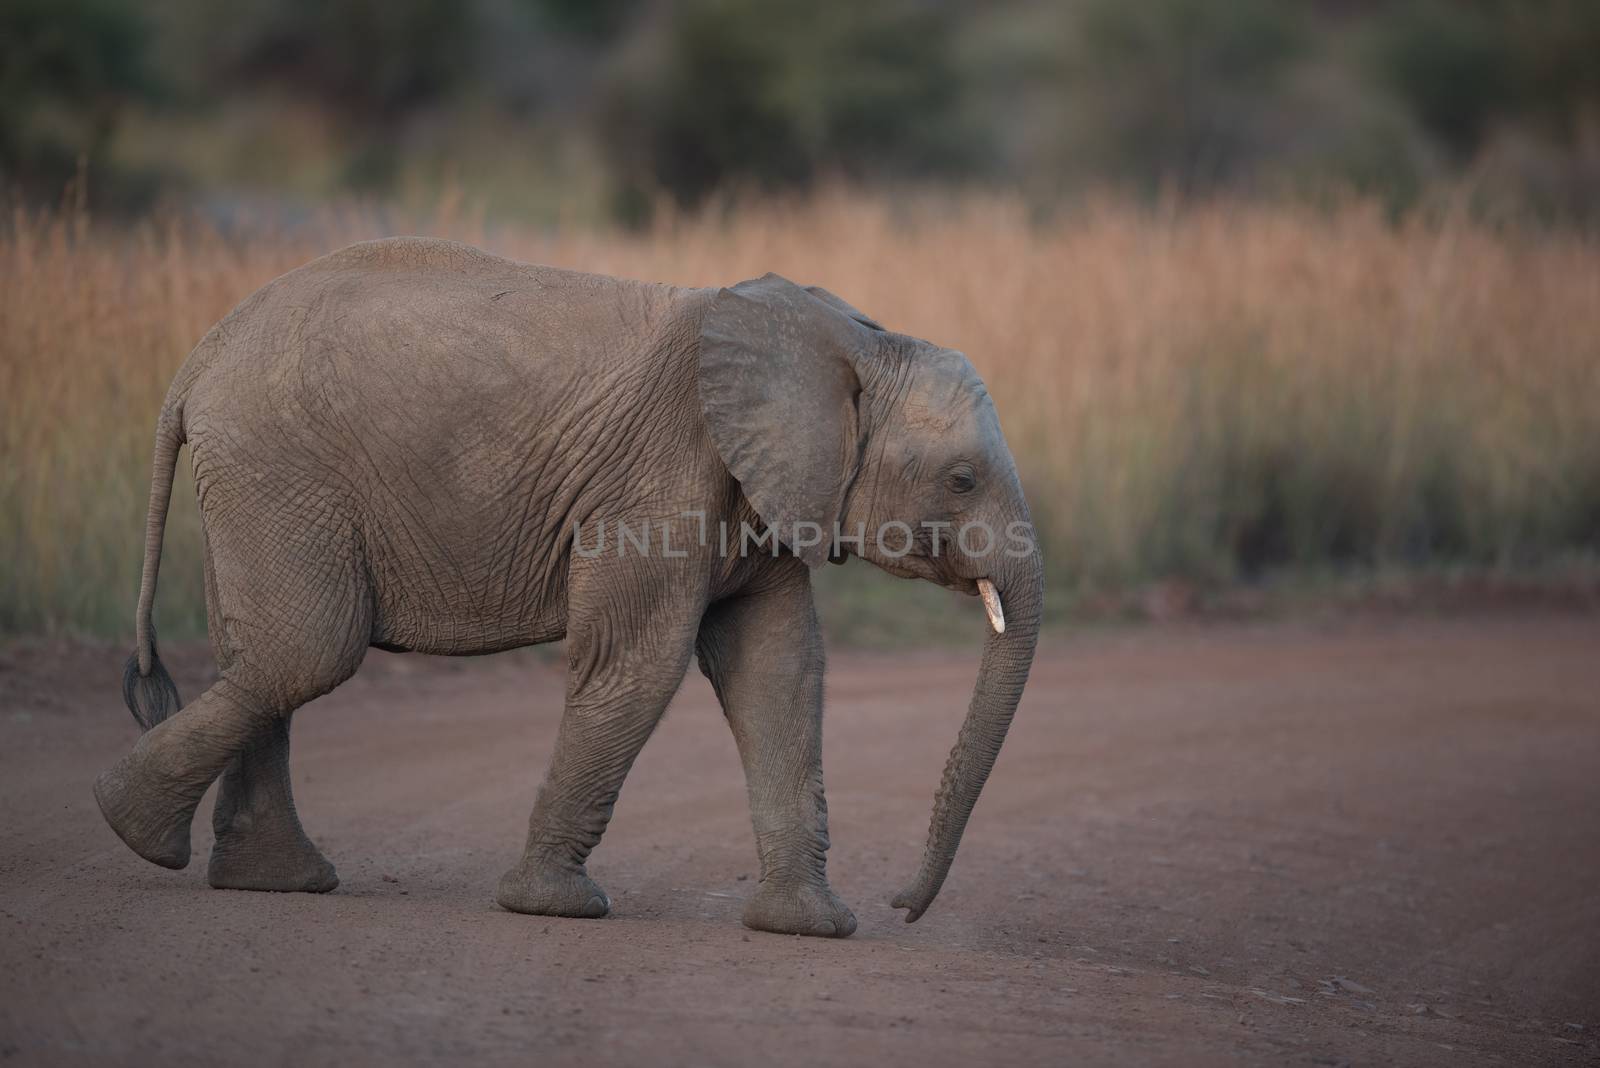 Elephant calf in the wilderness of Africa by ozkanzozmen